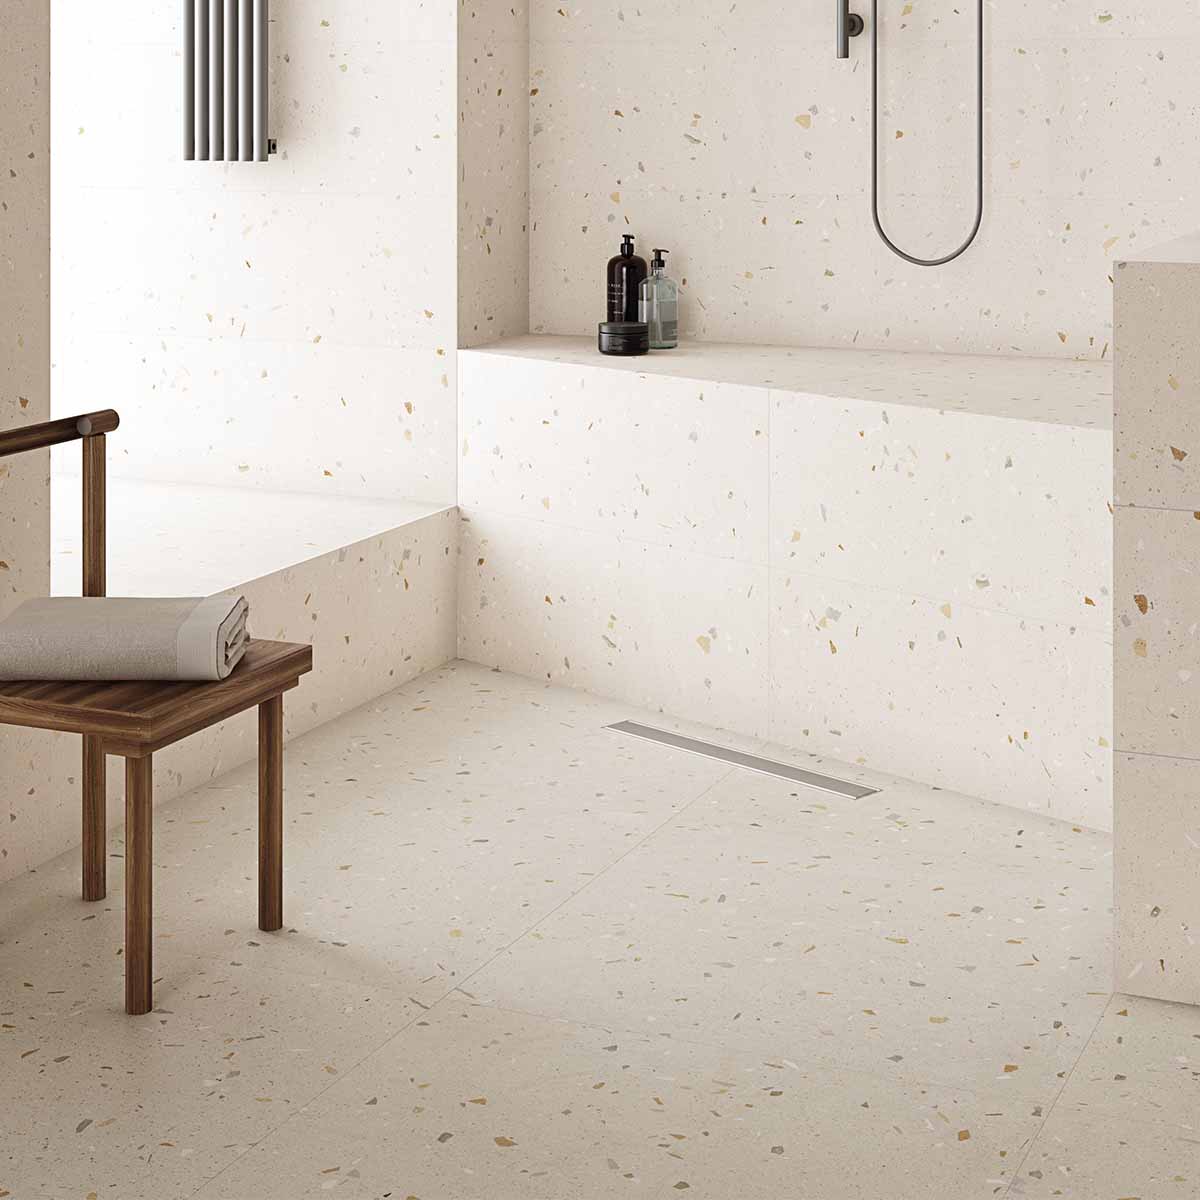 arcana croccante-r tutti frutti porcelain floor tile 80x80cm deluxe bathrooms ireland